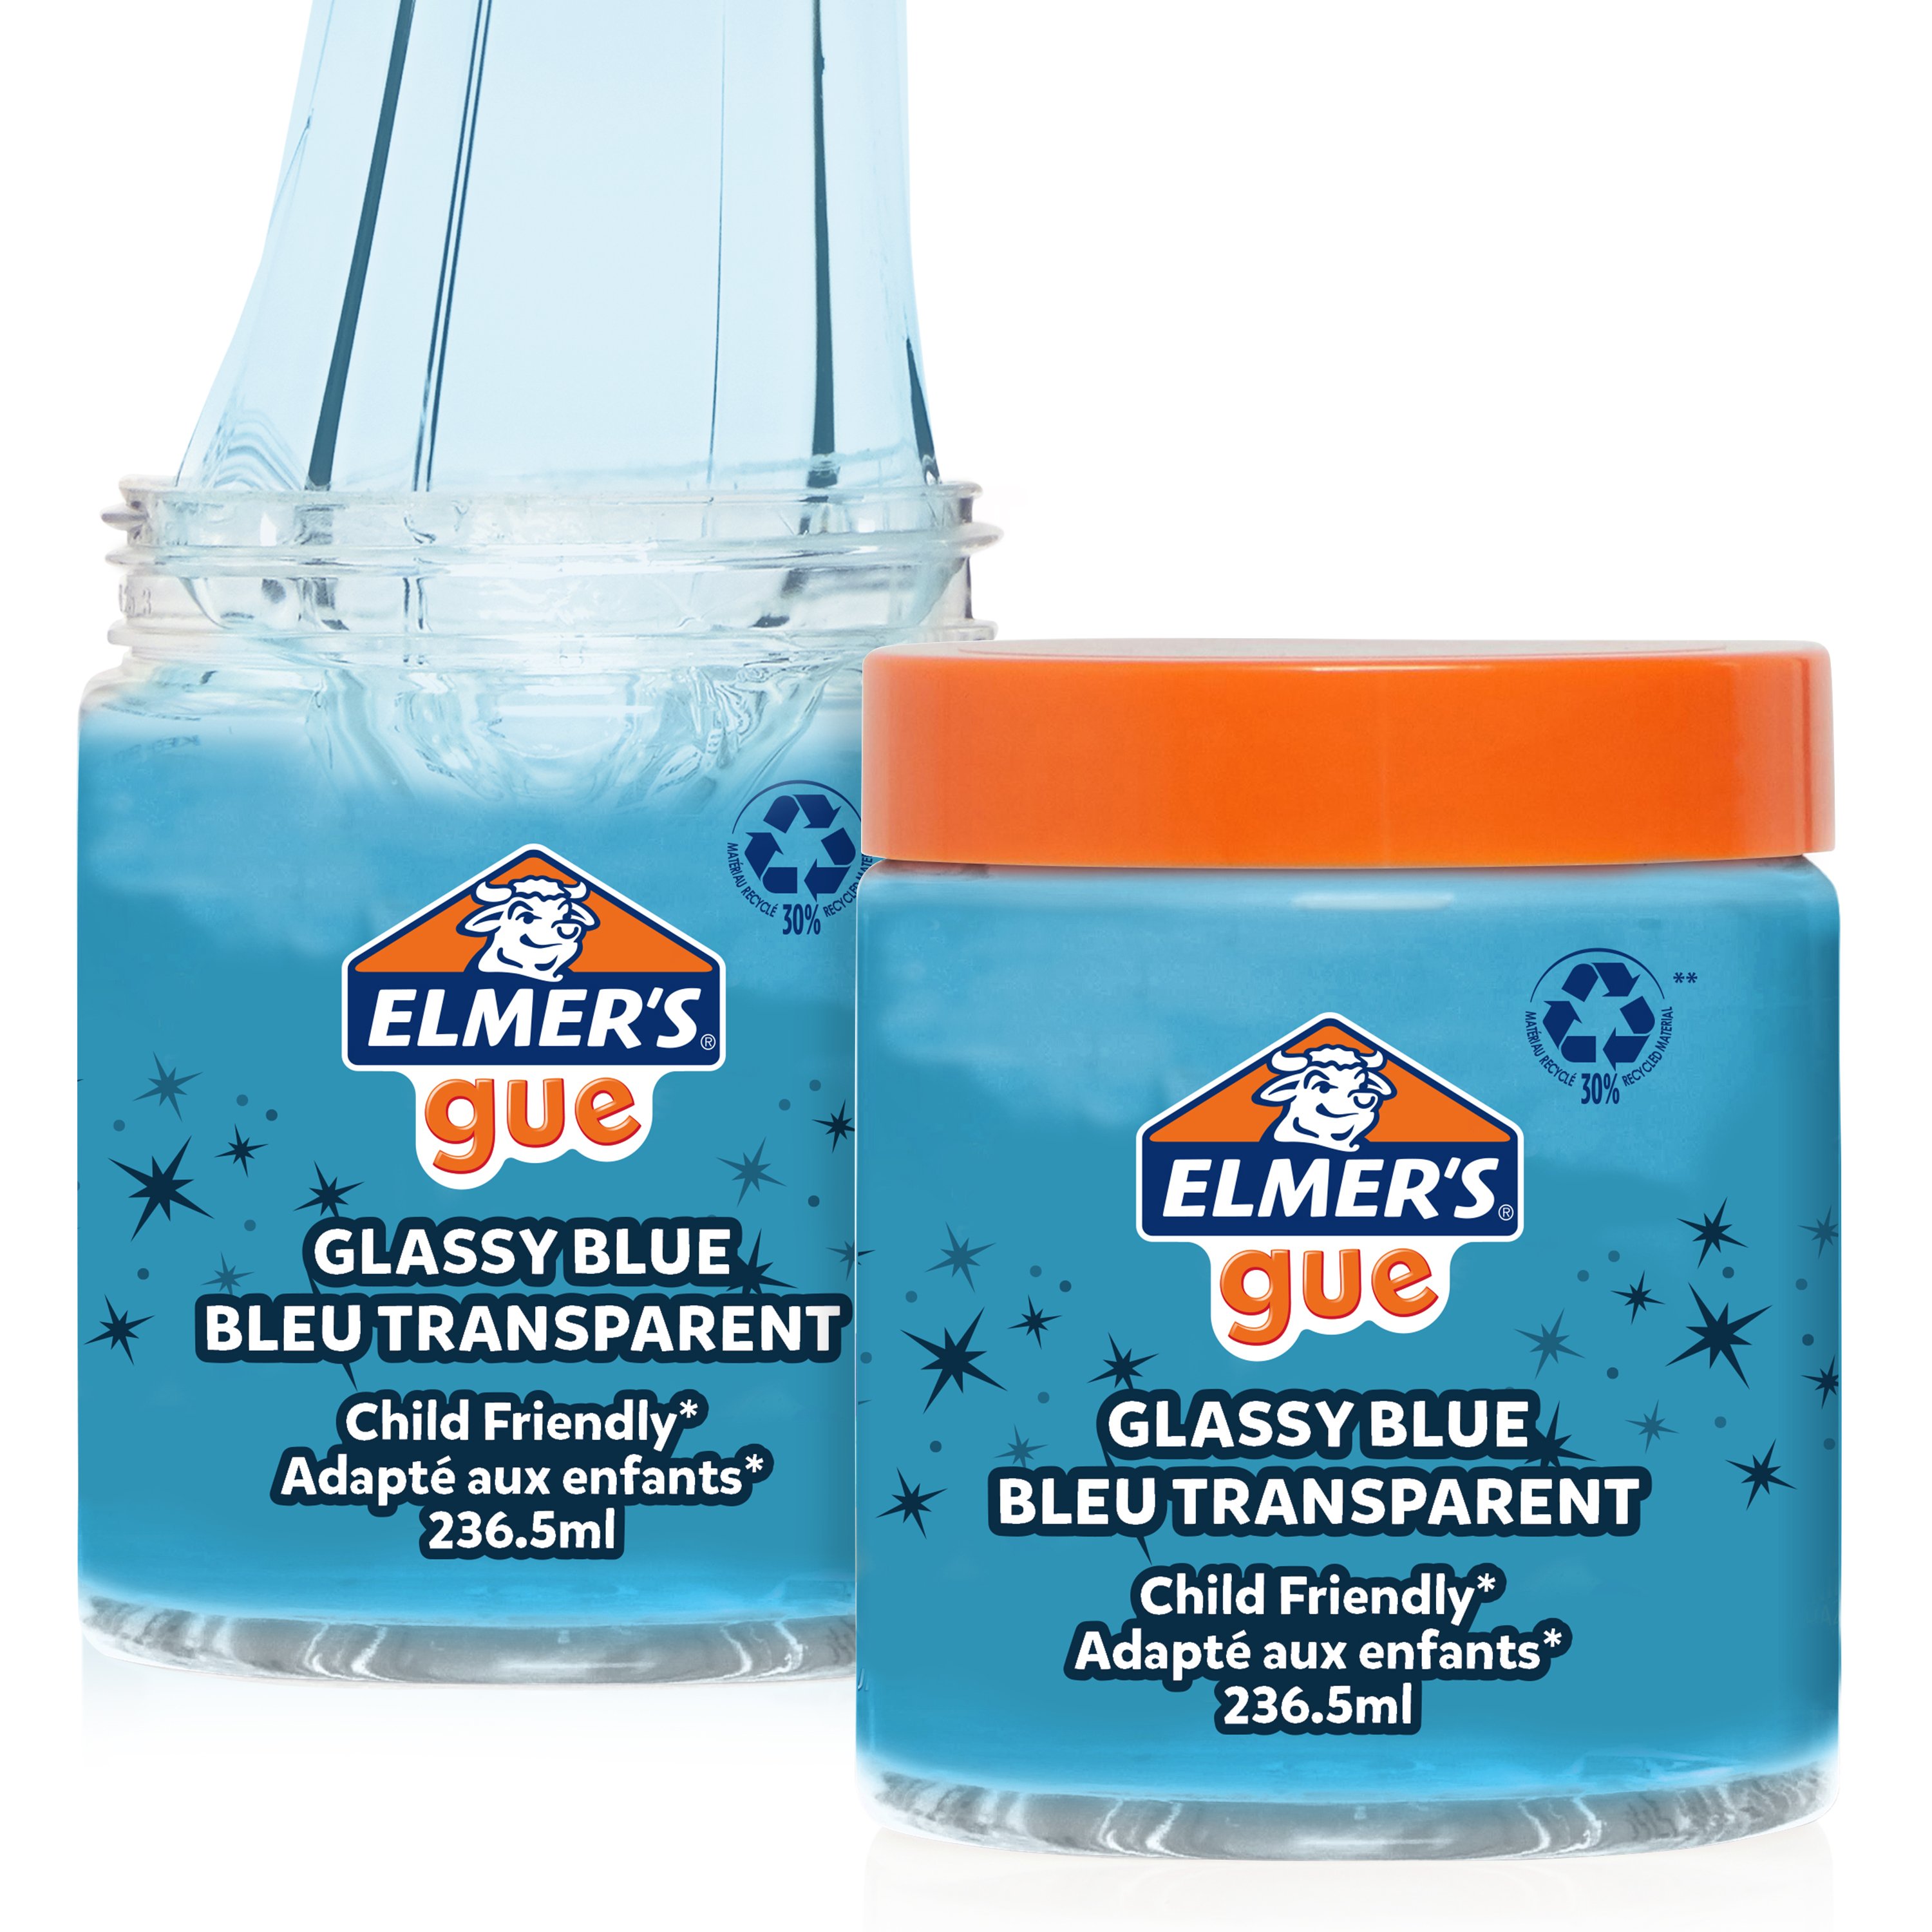 Elmer's - Gue Pre Made Slime - Blue (2162068) - Leker